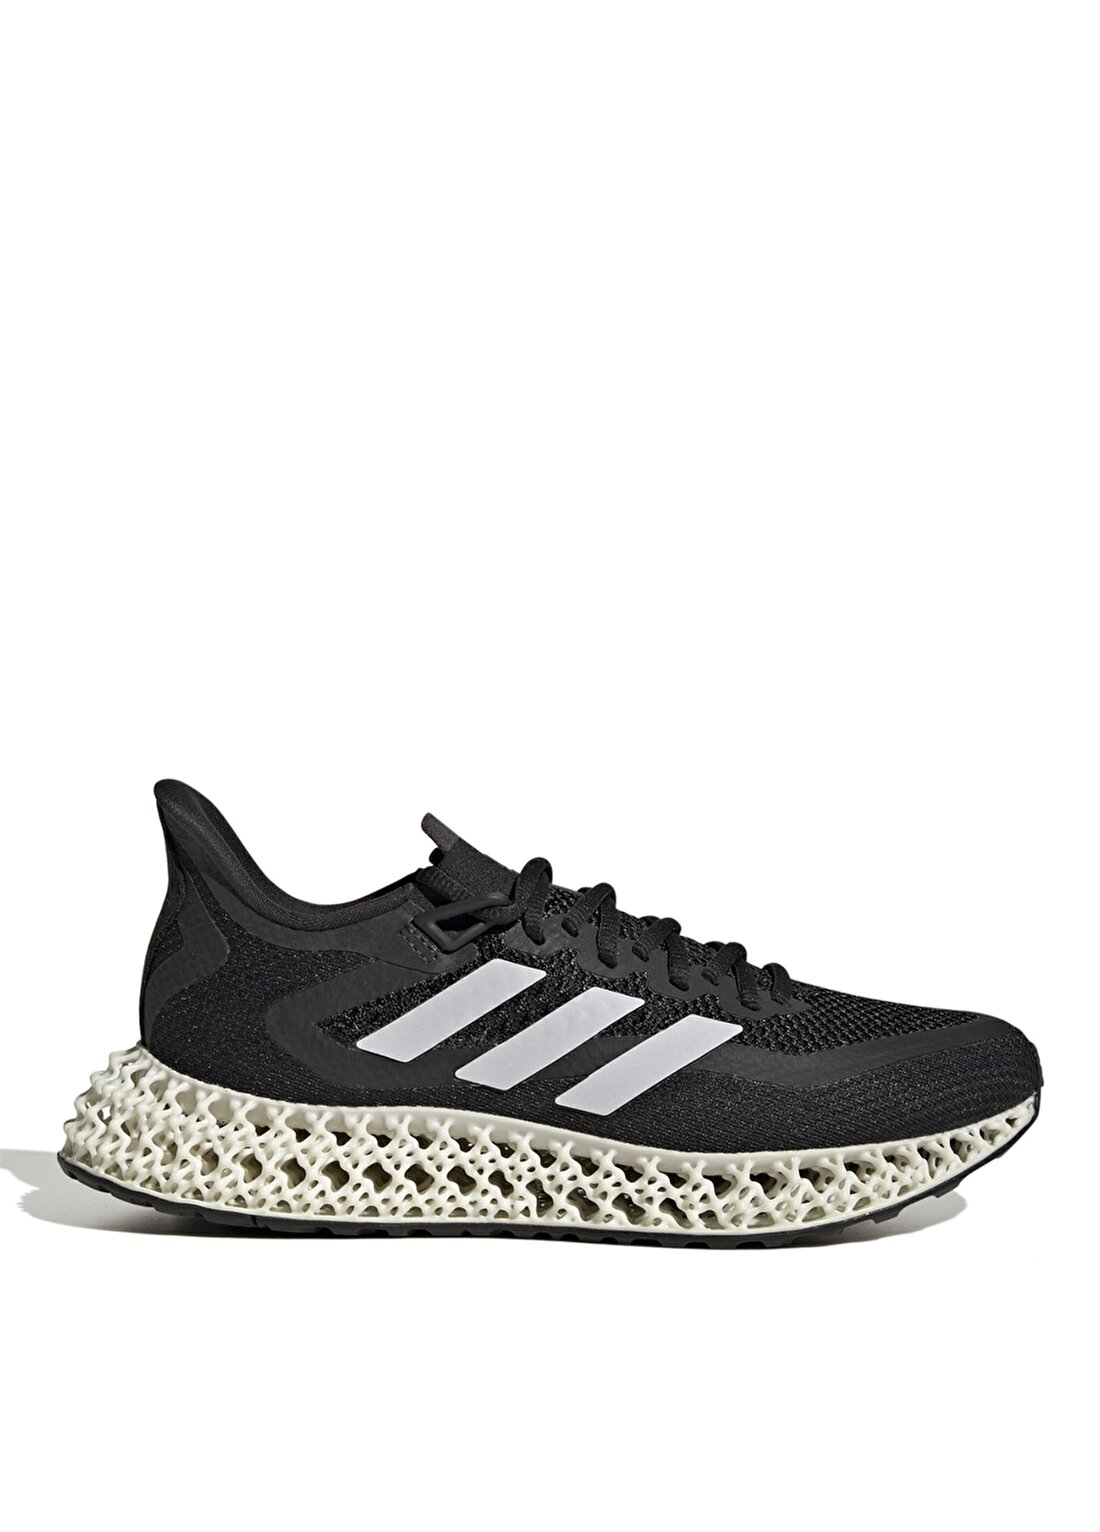 Adidas Siyah - Beyaz Kadın Koşu Ayakkabısı GX9266 4DFWD 2 W